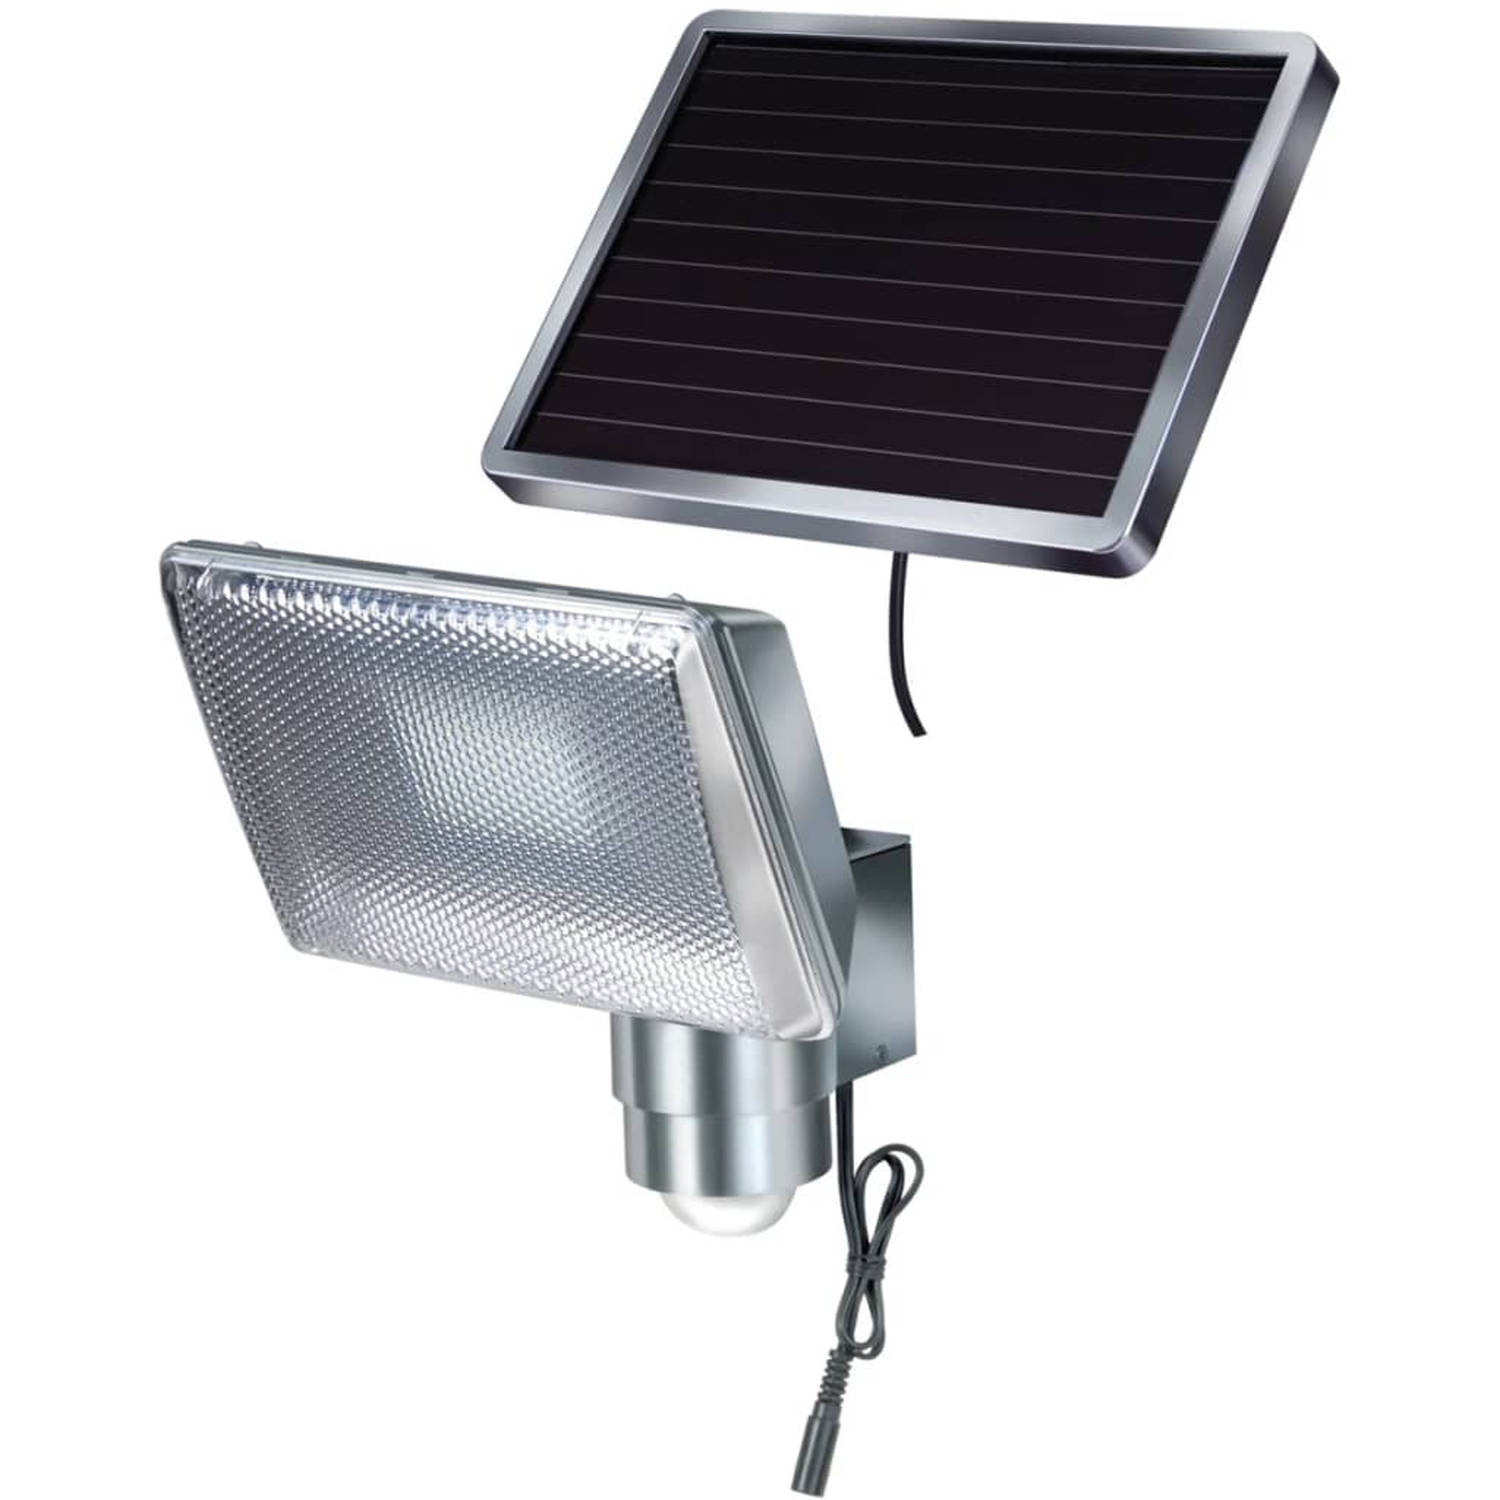 Brennenstuhl solar LED beveiligingslamp bewegingssensor (grijs-zilver)